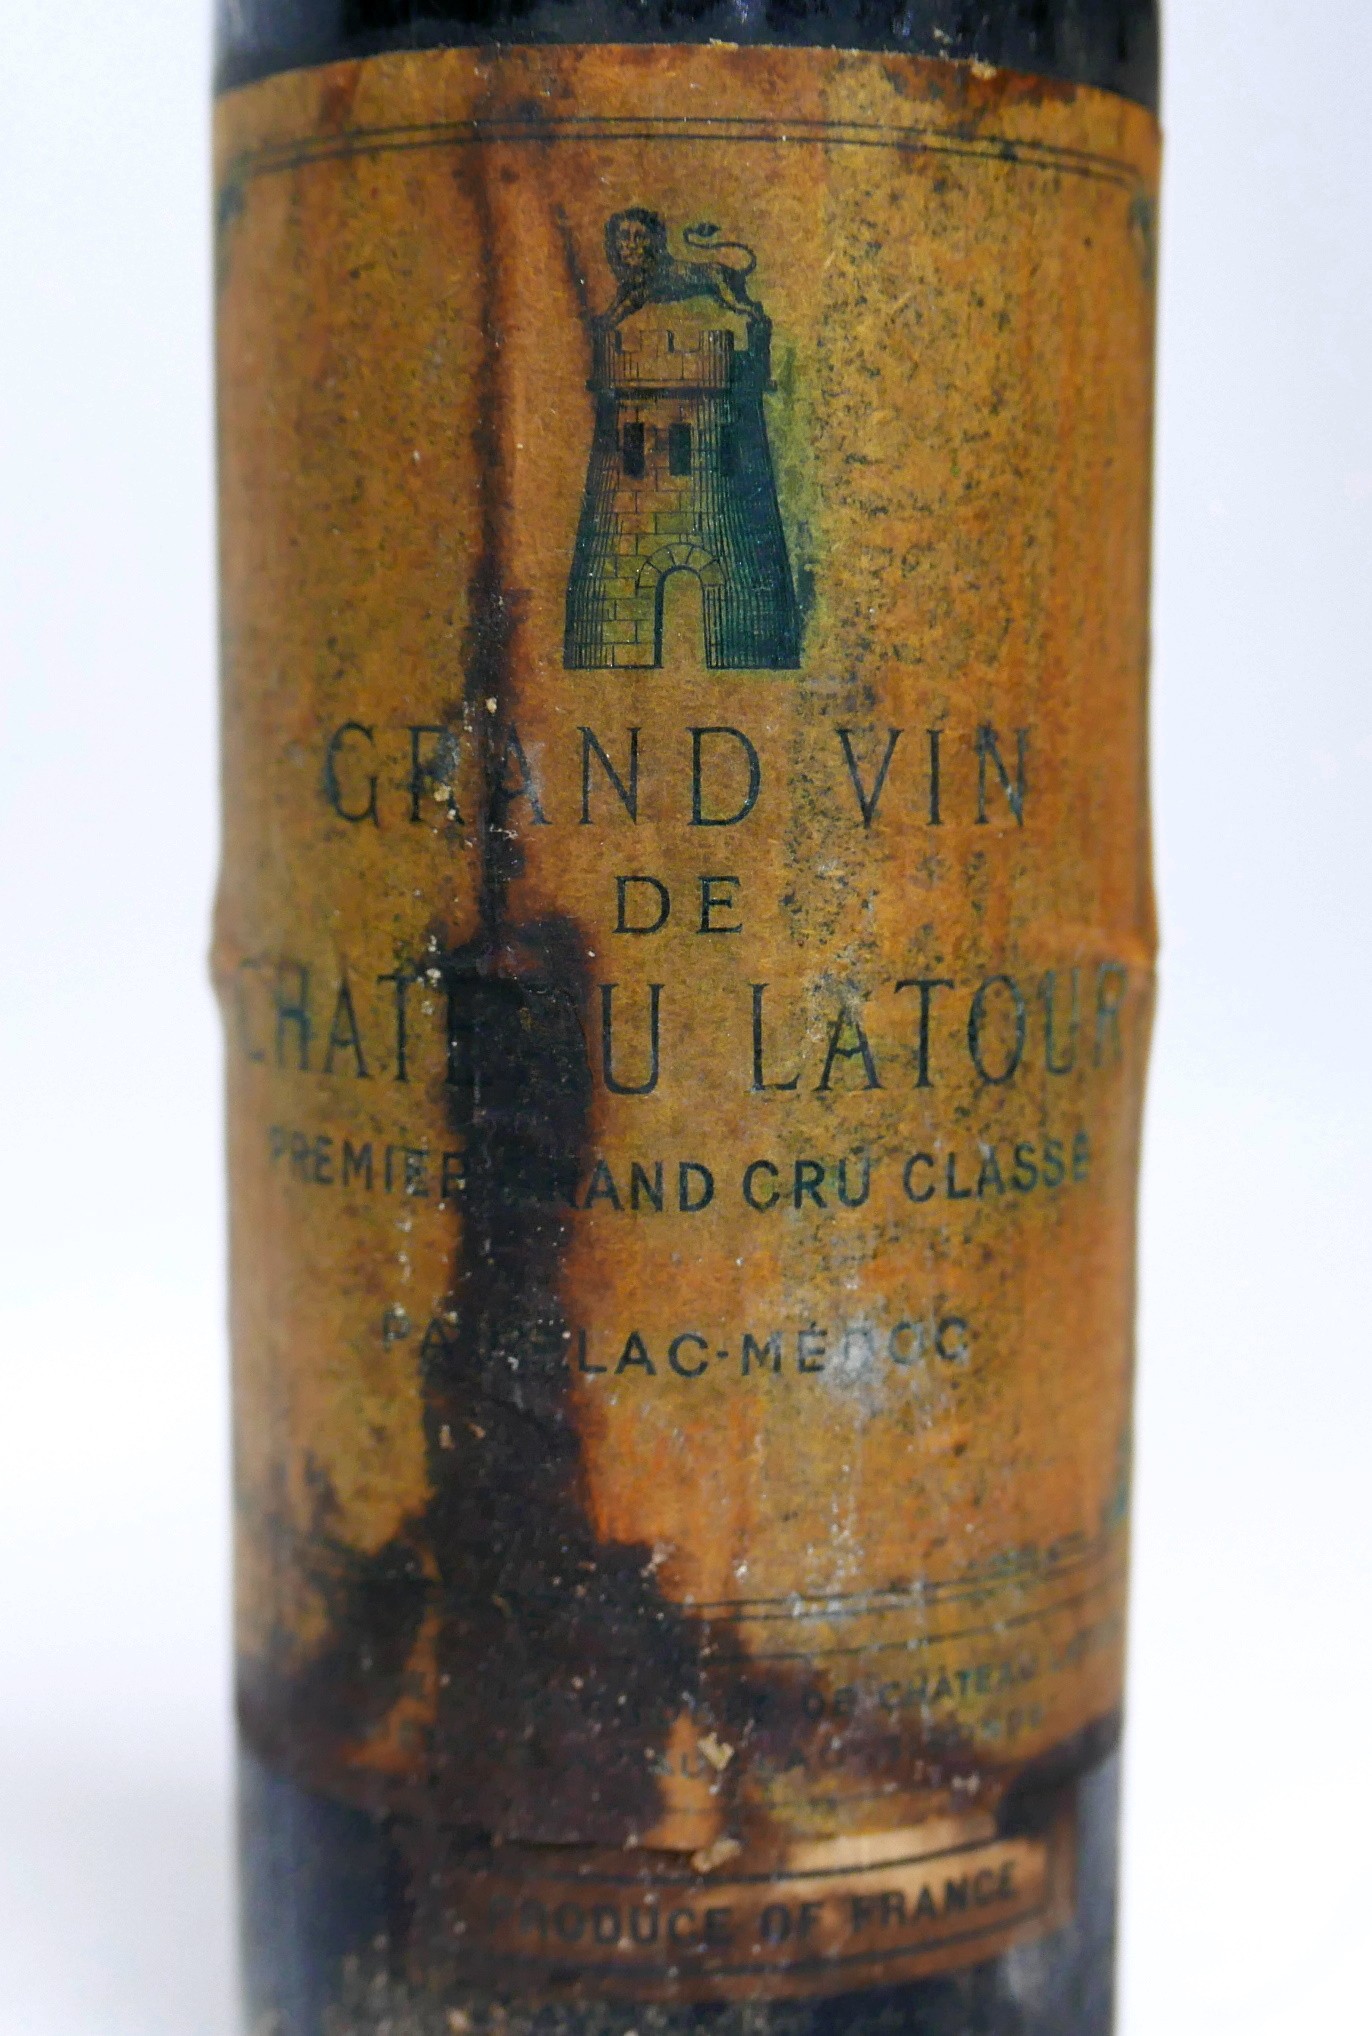 Vintage wine: three bottles of Grand Vin de Chateau Latour, Pauillac-Medoc, Premier grand Cru - Image 5 of 6